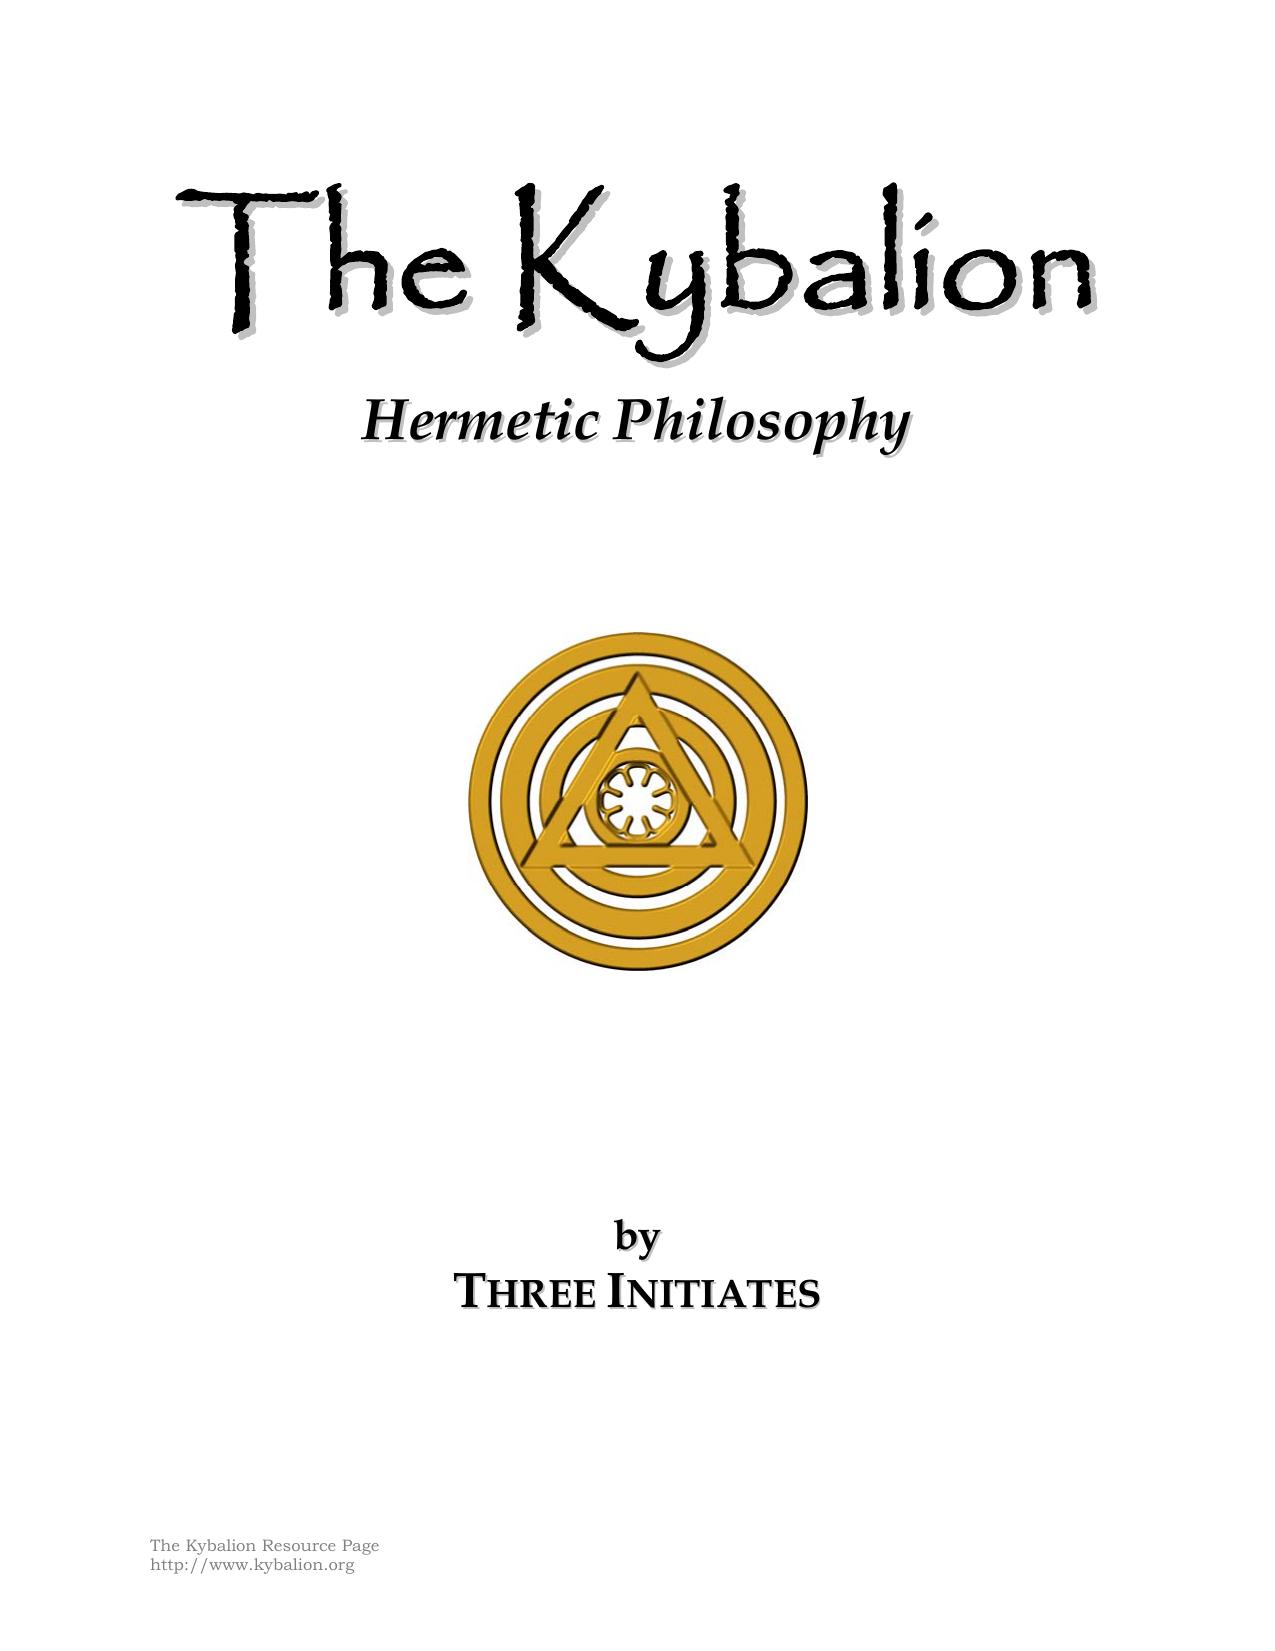 TheKybalion - Hermetic Philosophy